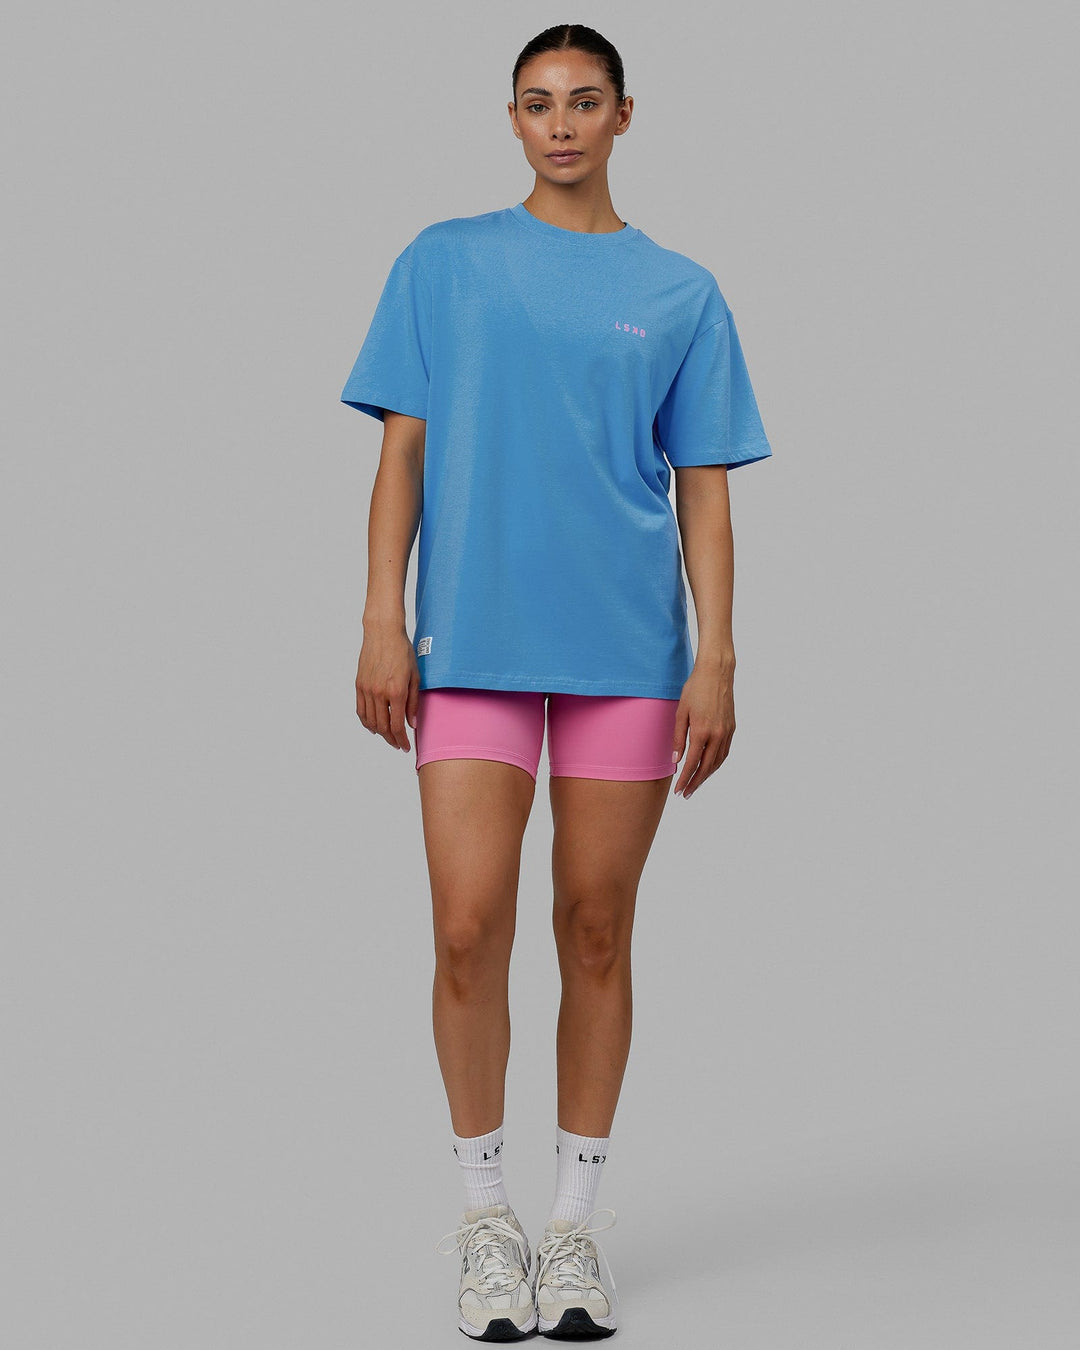 Woman wearing Unisex VS4 FLXCotton Tee Oversize - Azure Blue-Spark Pink